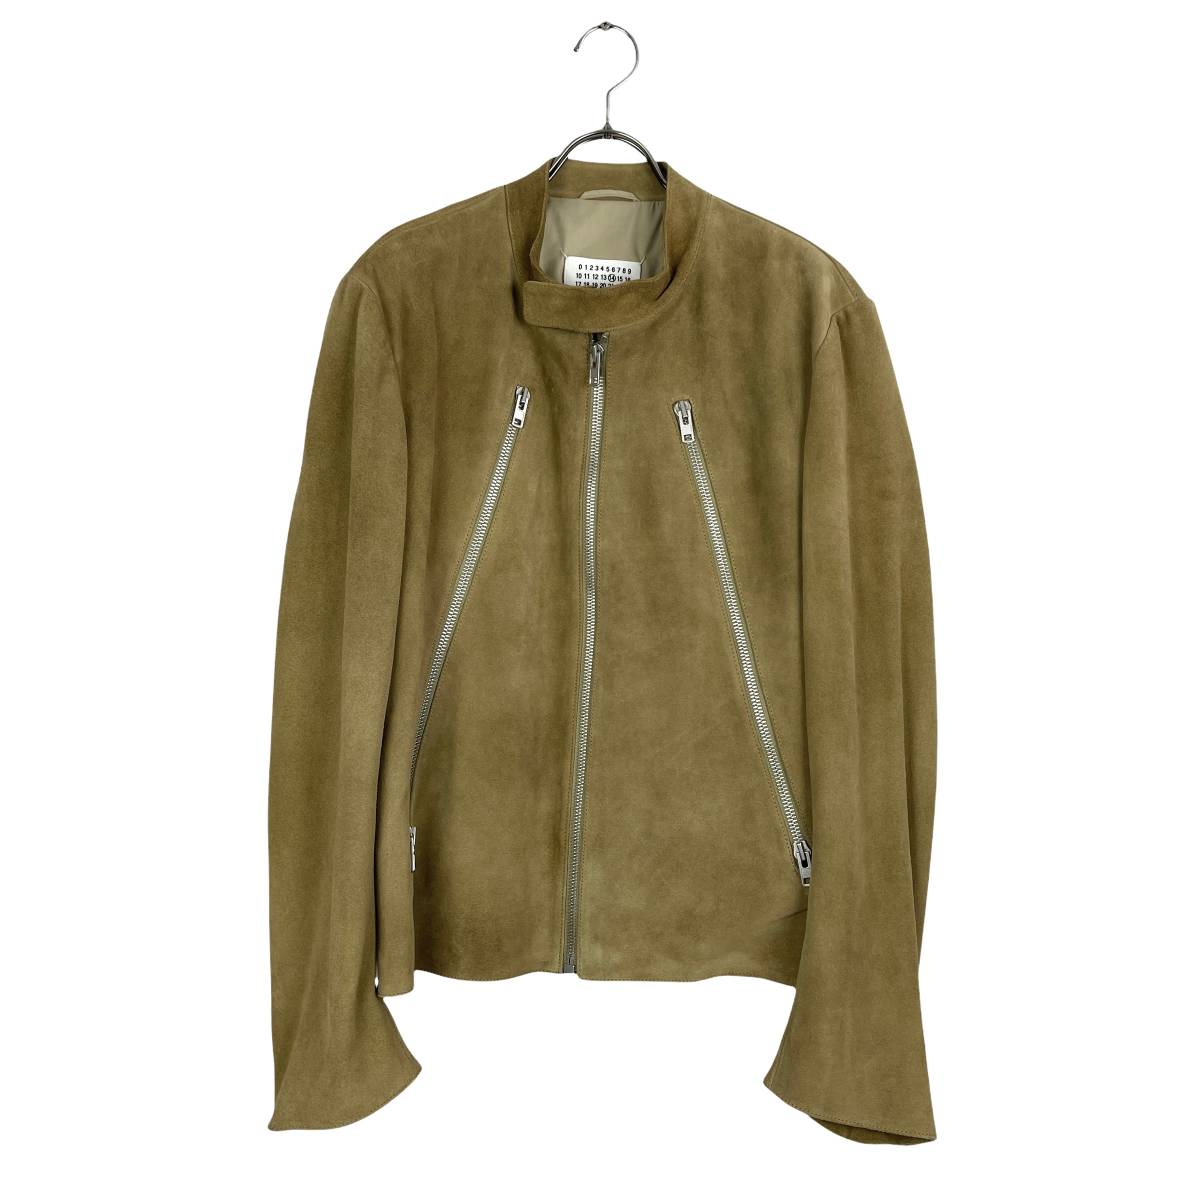 Maison Margiela(メゾン マルジェラ) 八の字 sude leather jacket (beige) 1